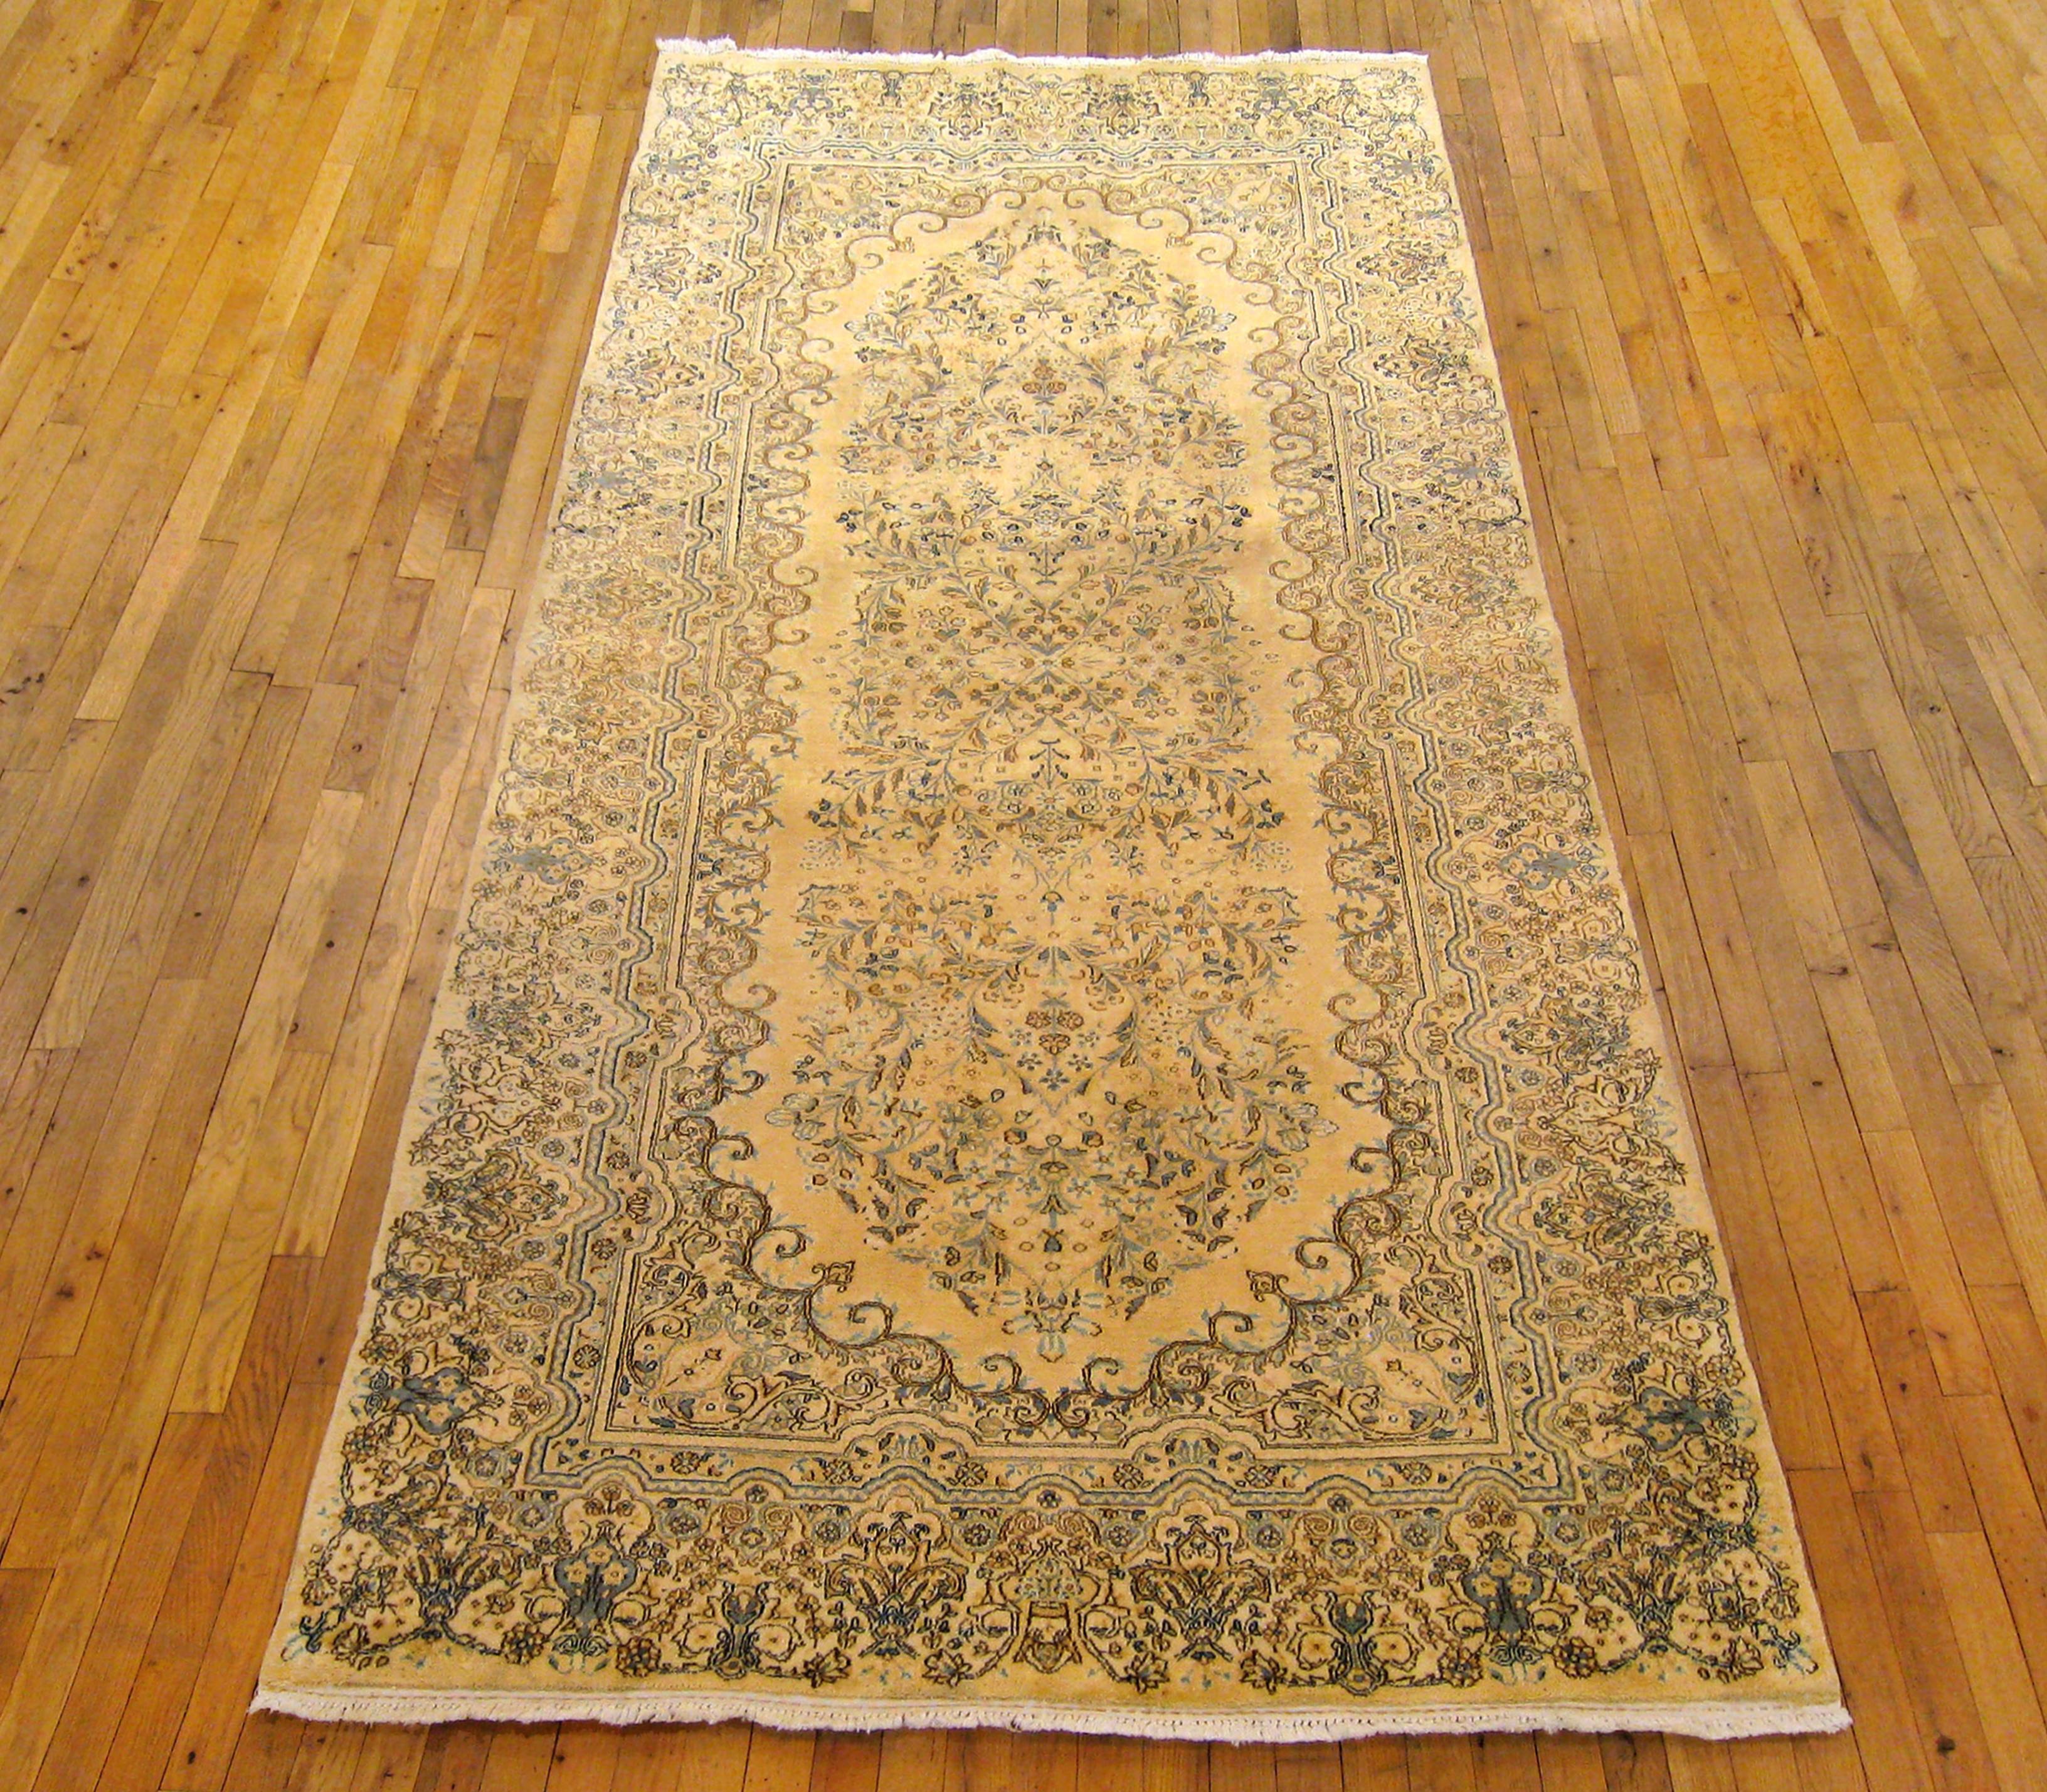 Antique Persian Kerman oriental carpet, size 10'2